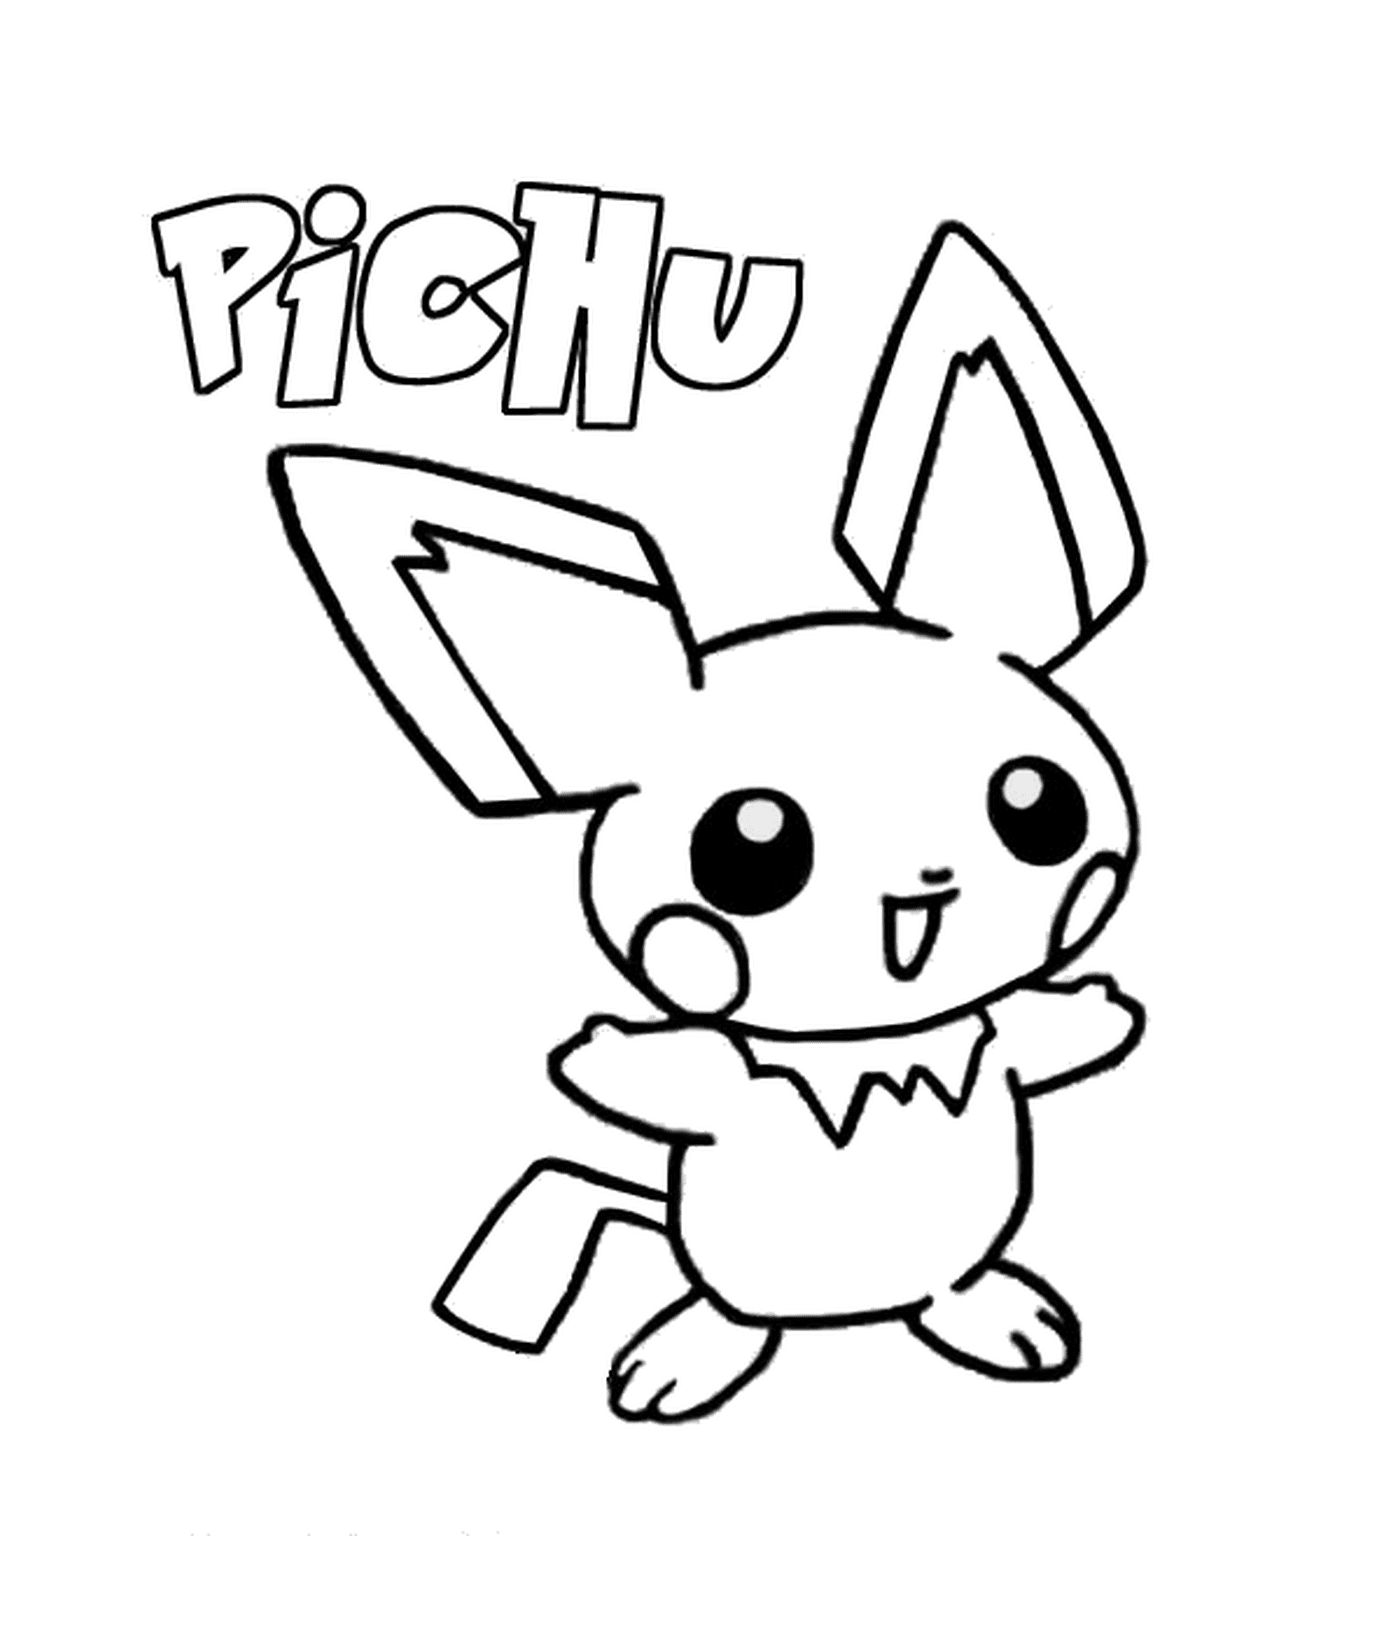  Pokémon PichuCity name (optional, probably does not need a translation) 